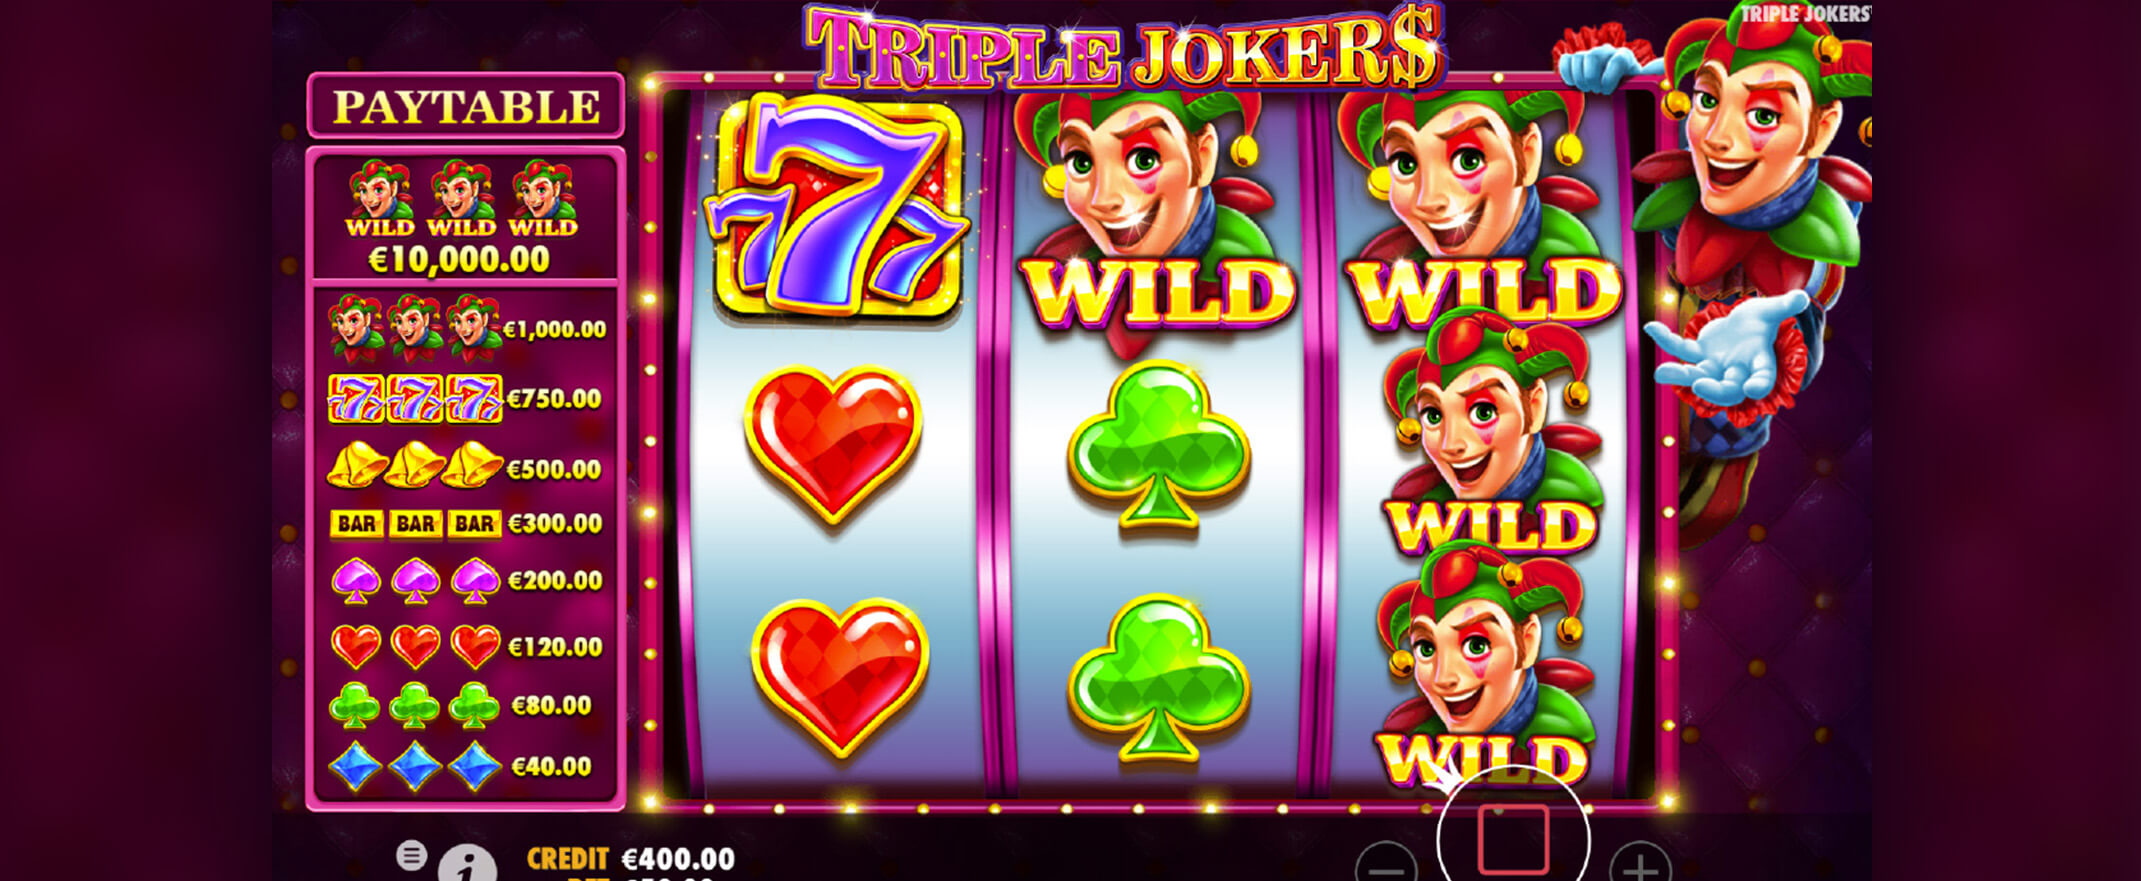 Triple Jokers Spielautomat von Pragmatic Play